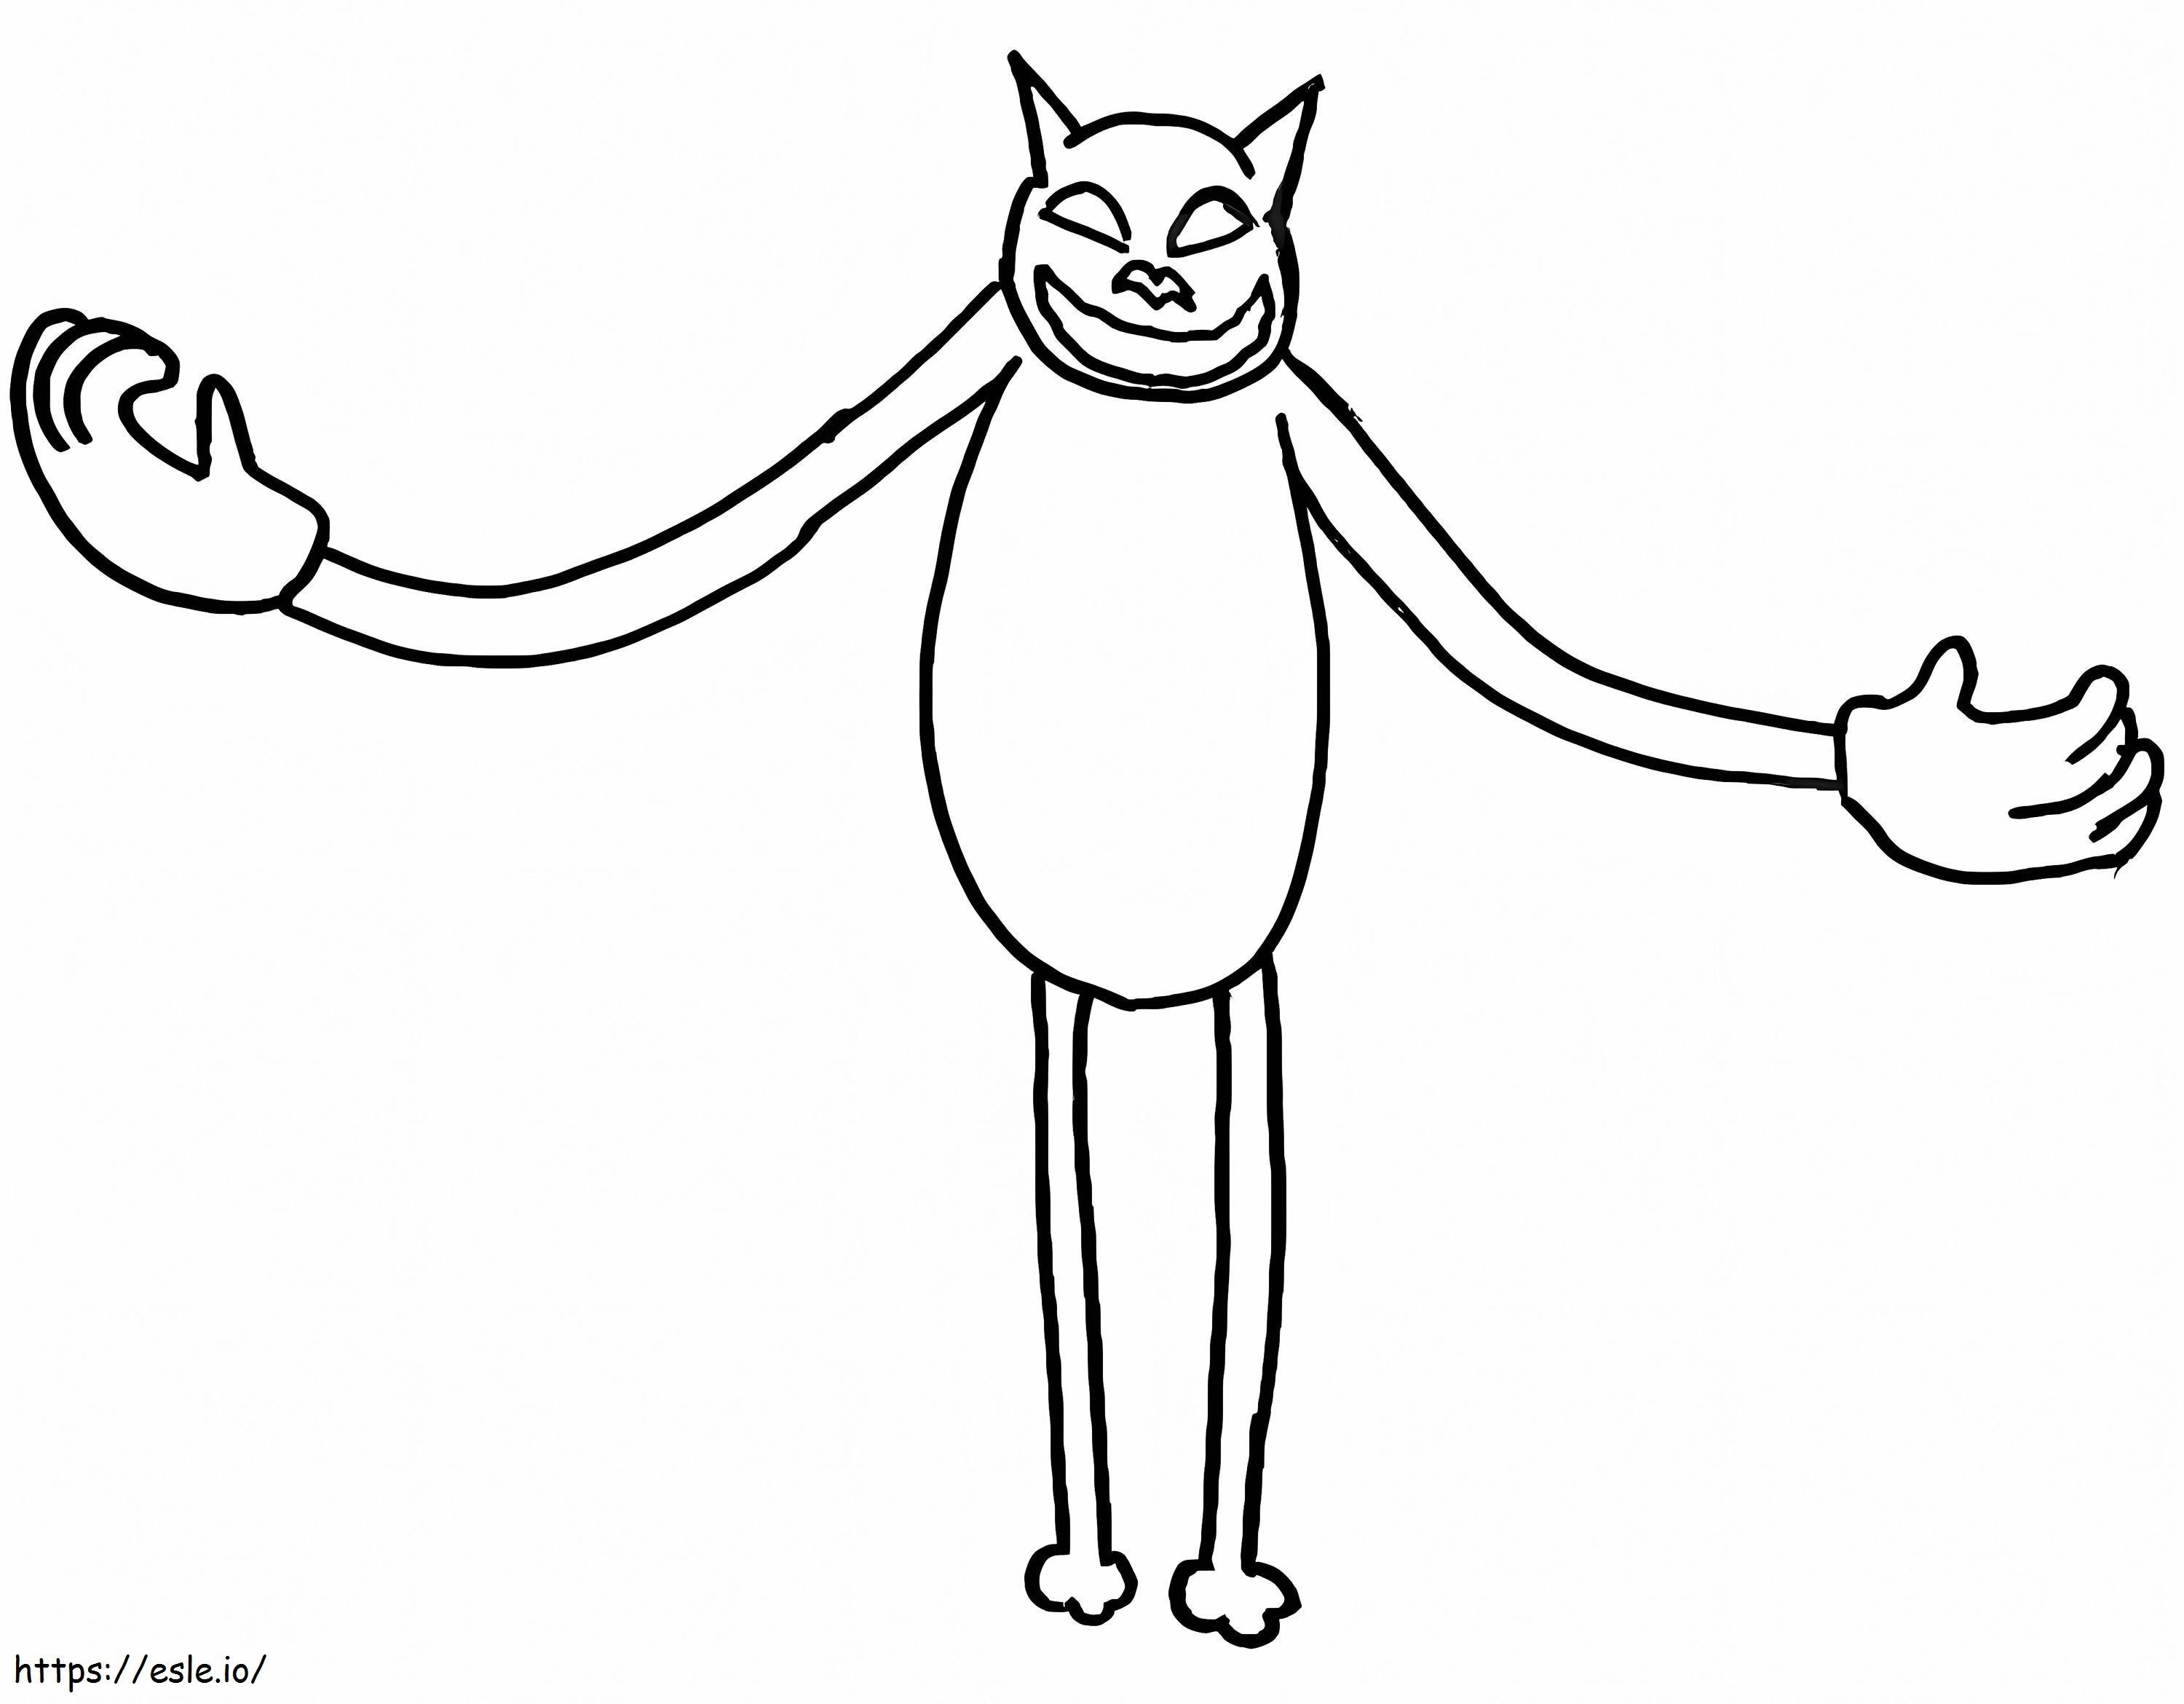 Gigantyczny kot z kreskówek kolorowanka